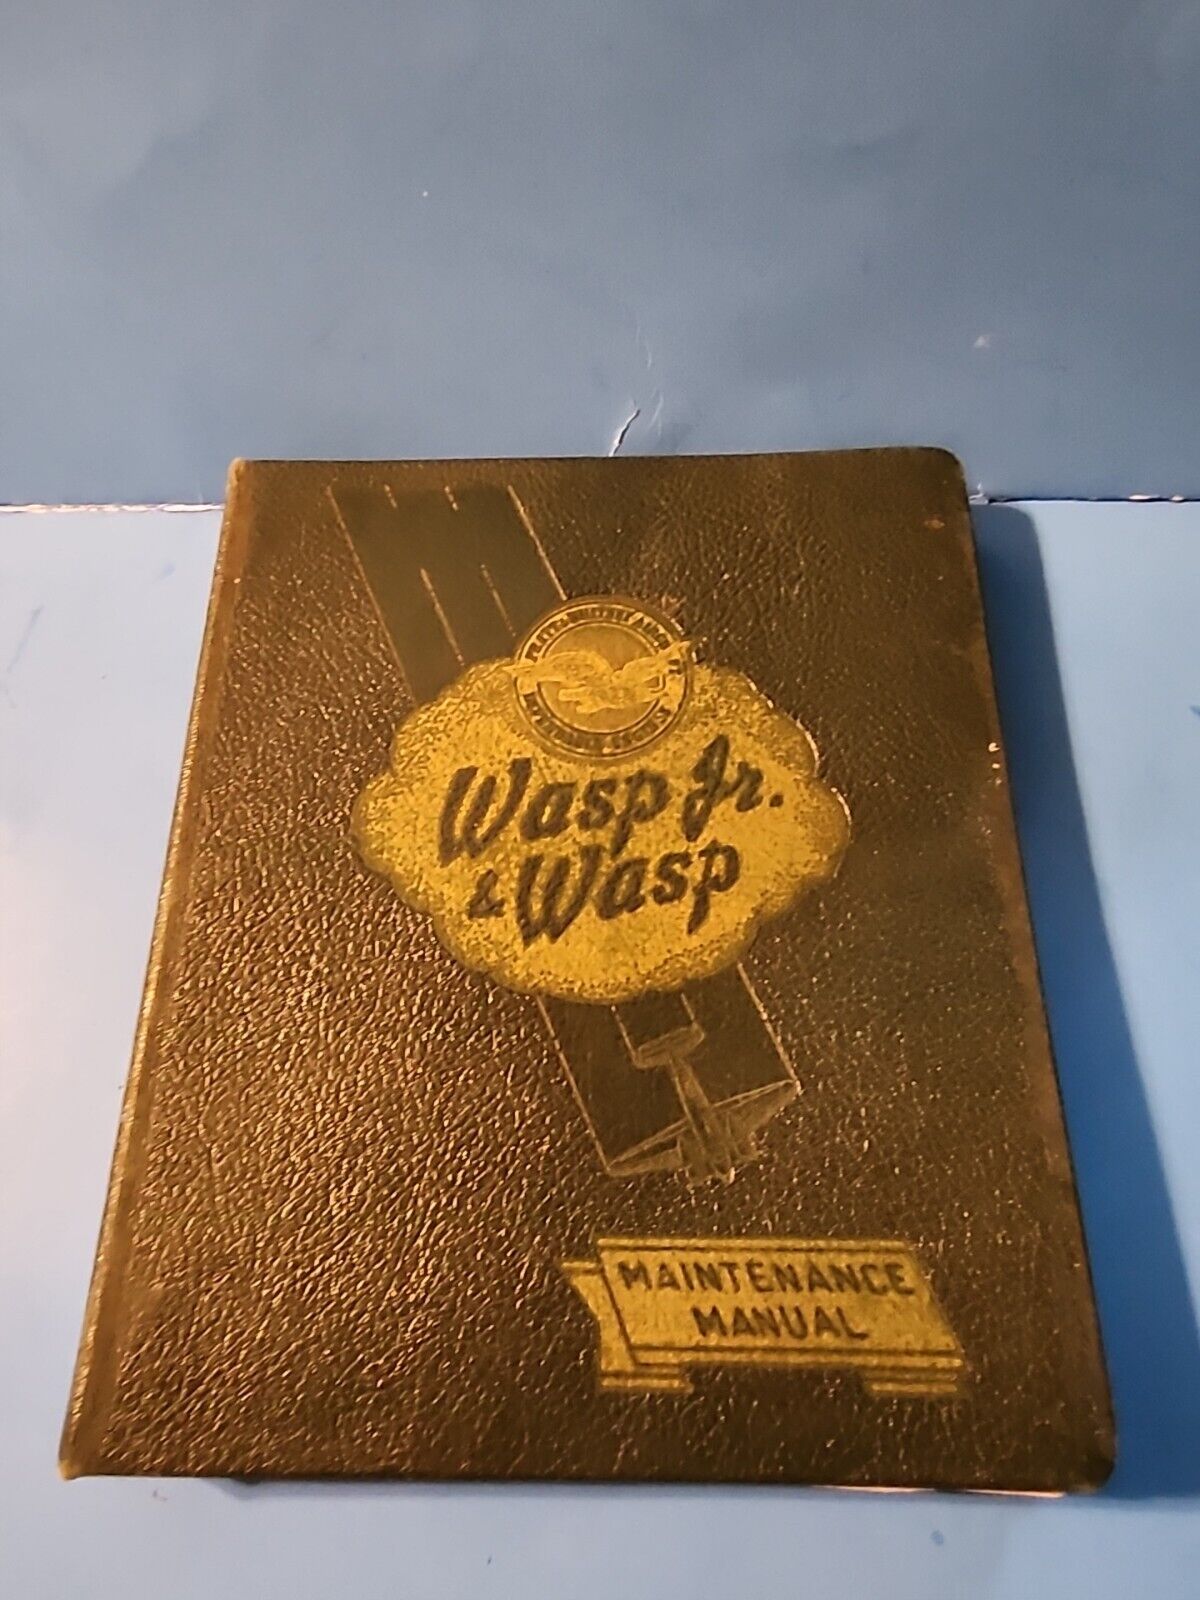 Pratt Whitney Wasp Jr. & Wasp maintenance manual.  Original binder.  Very good.